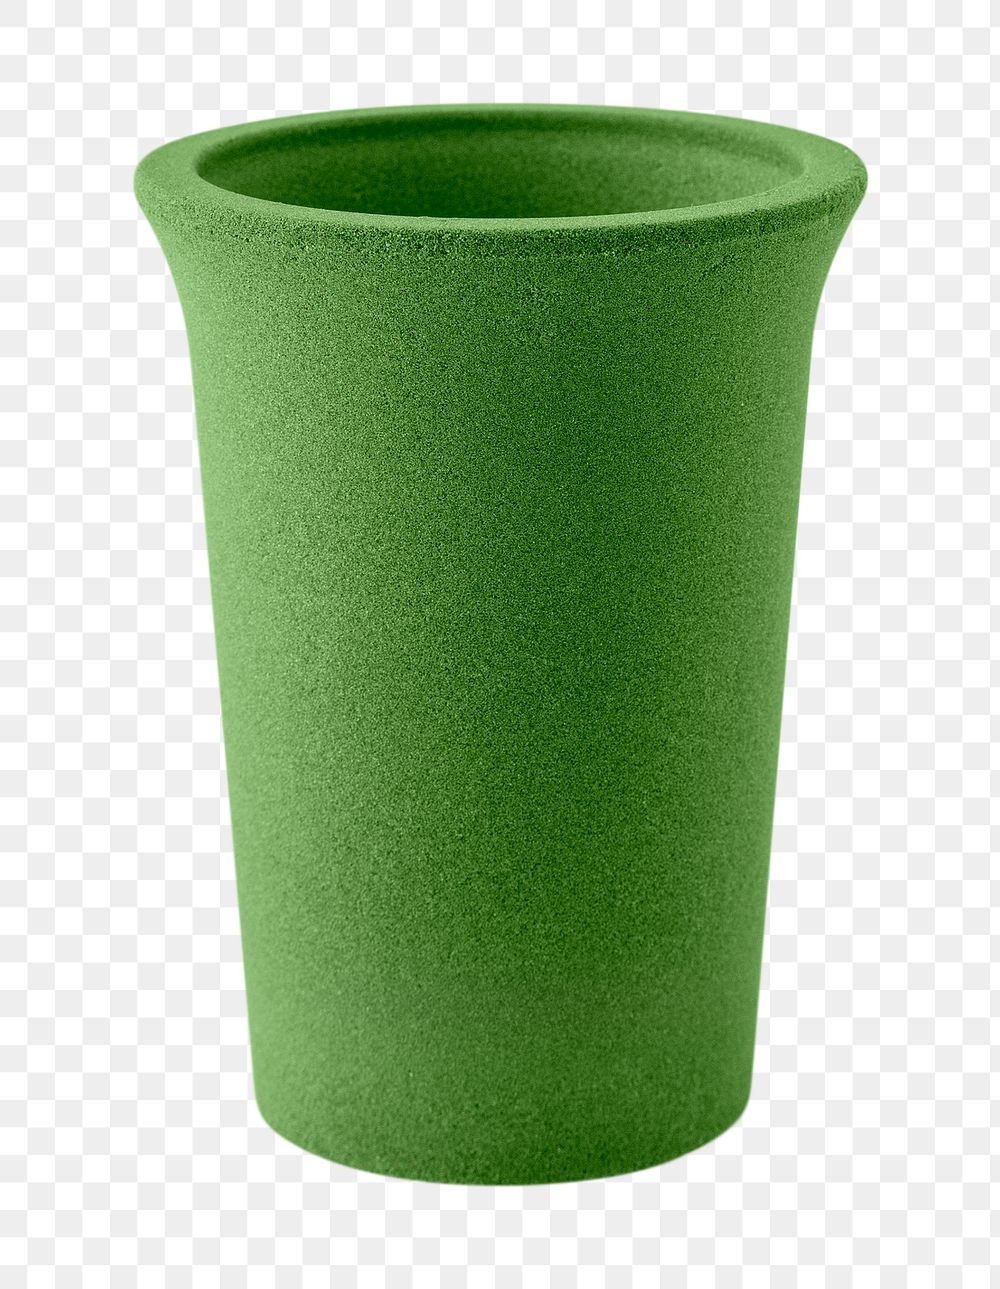 Green planting pot design element